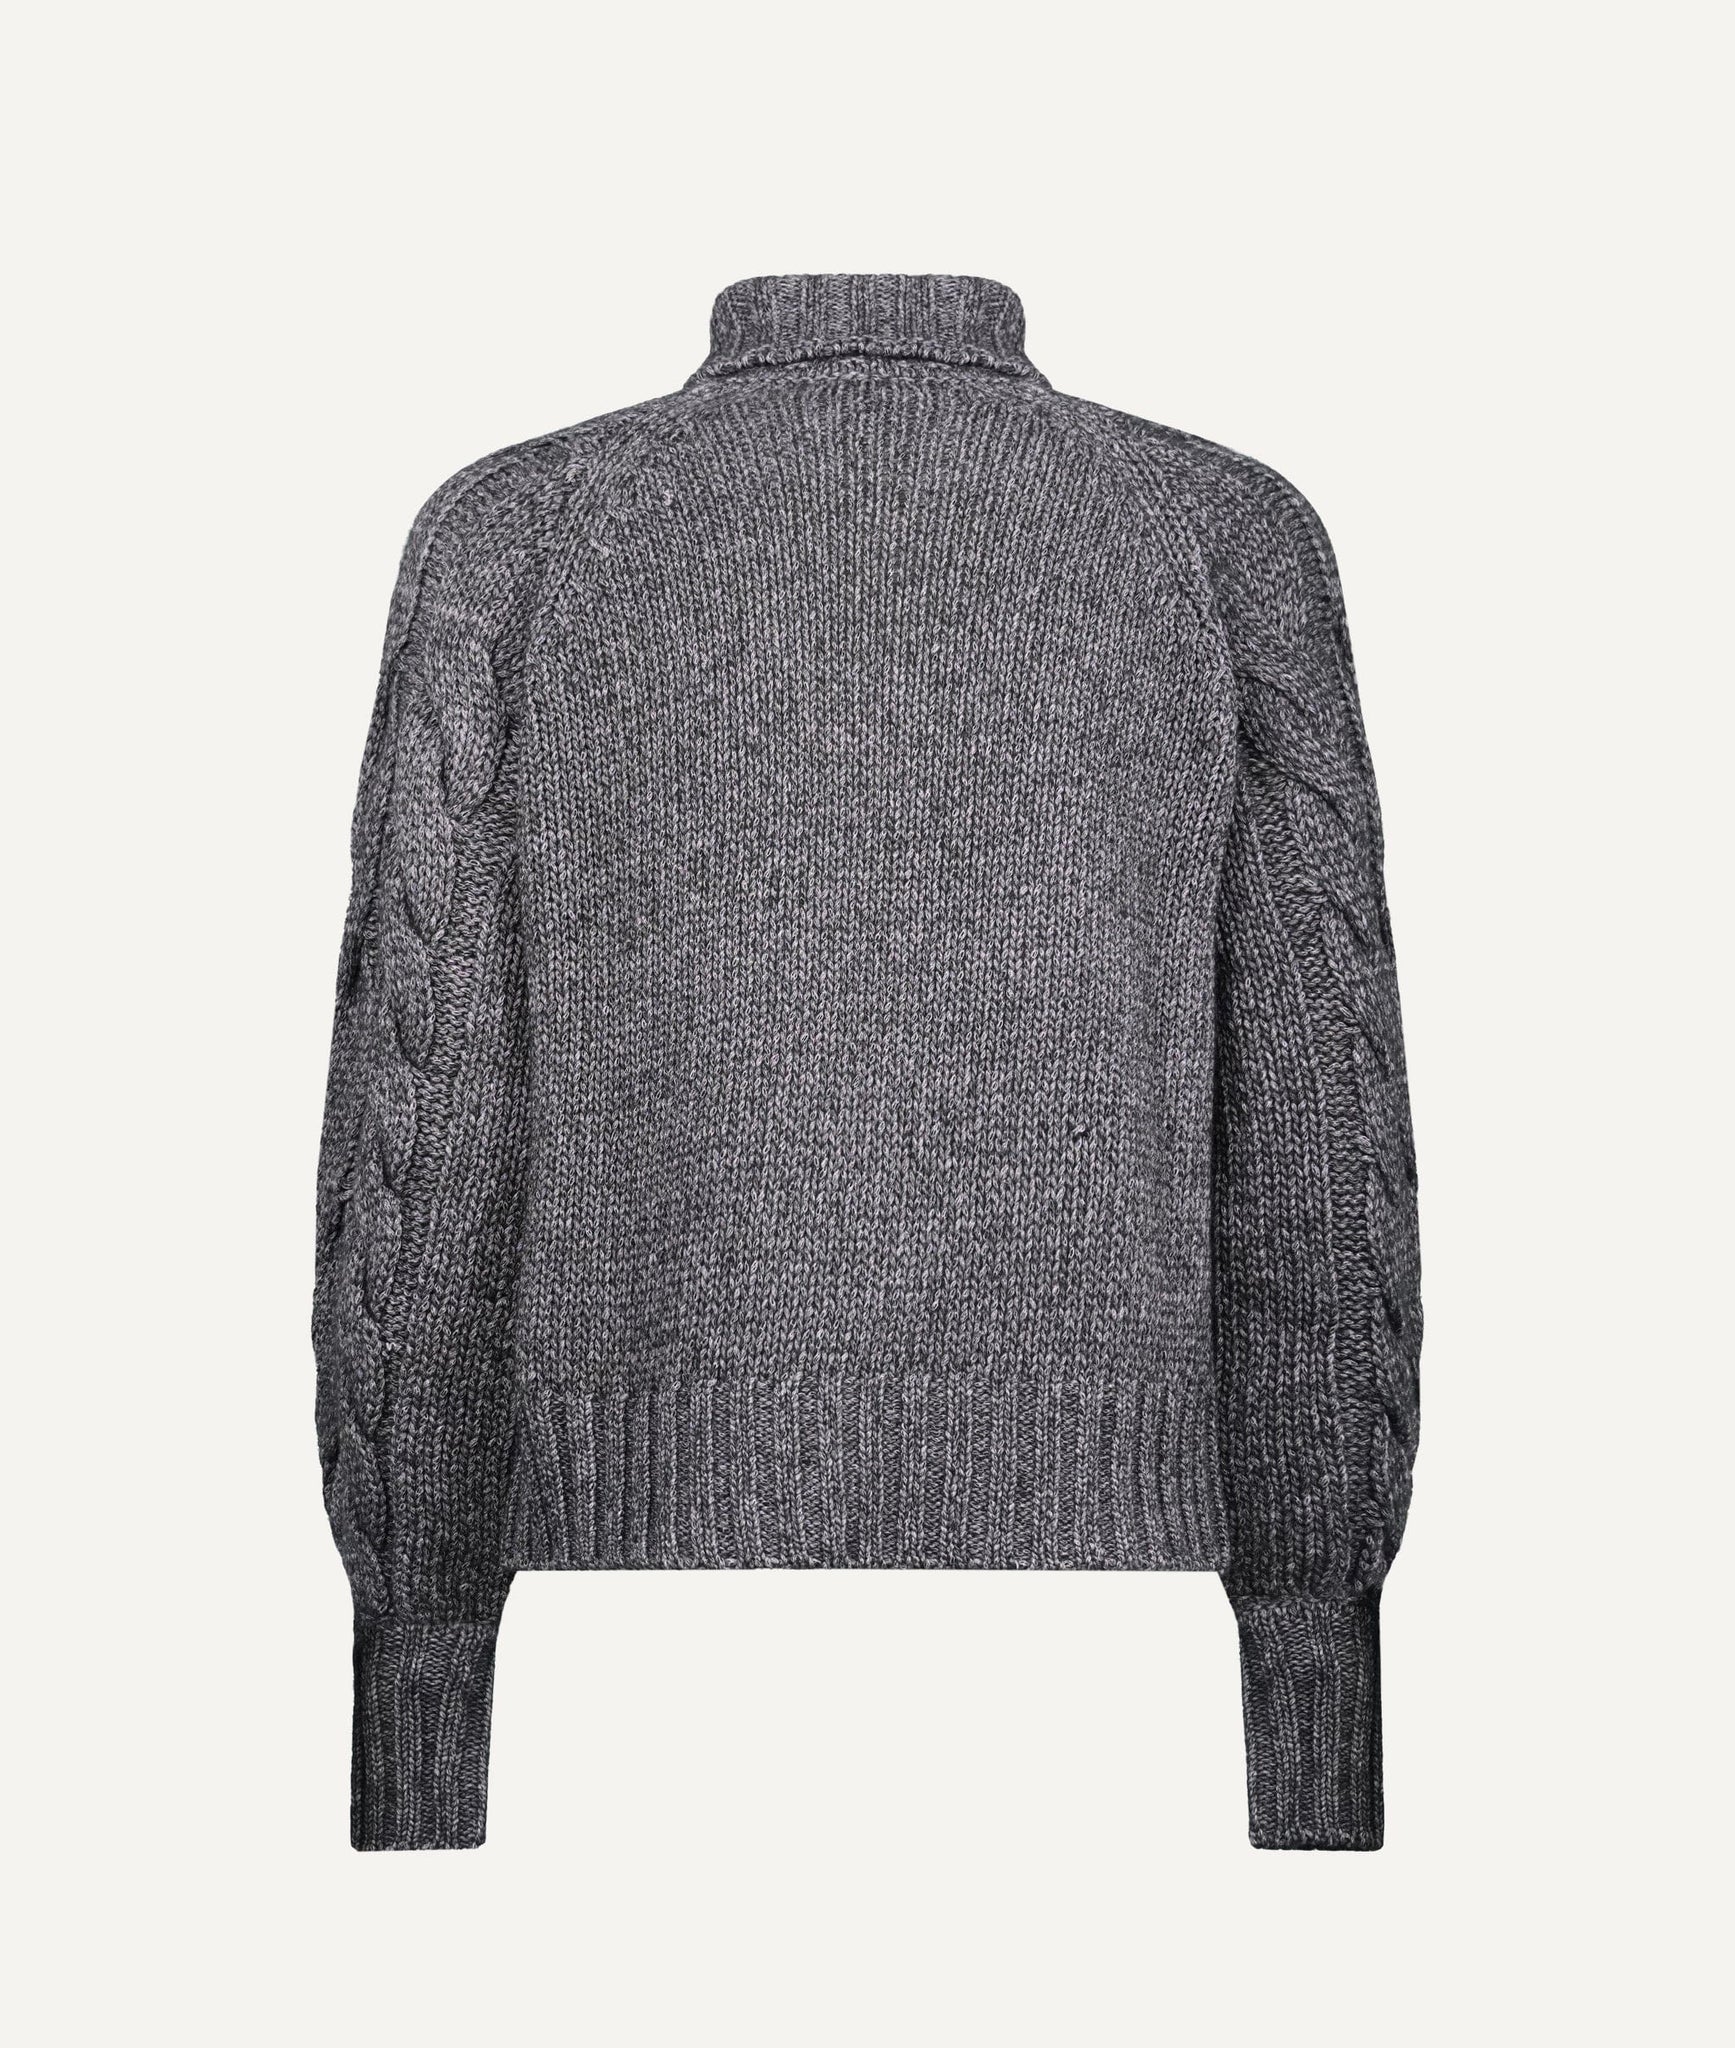 Eleventy - Sweater in Alpaca & Cotton